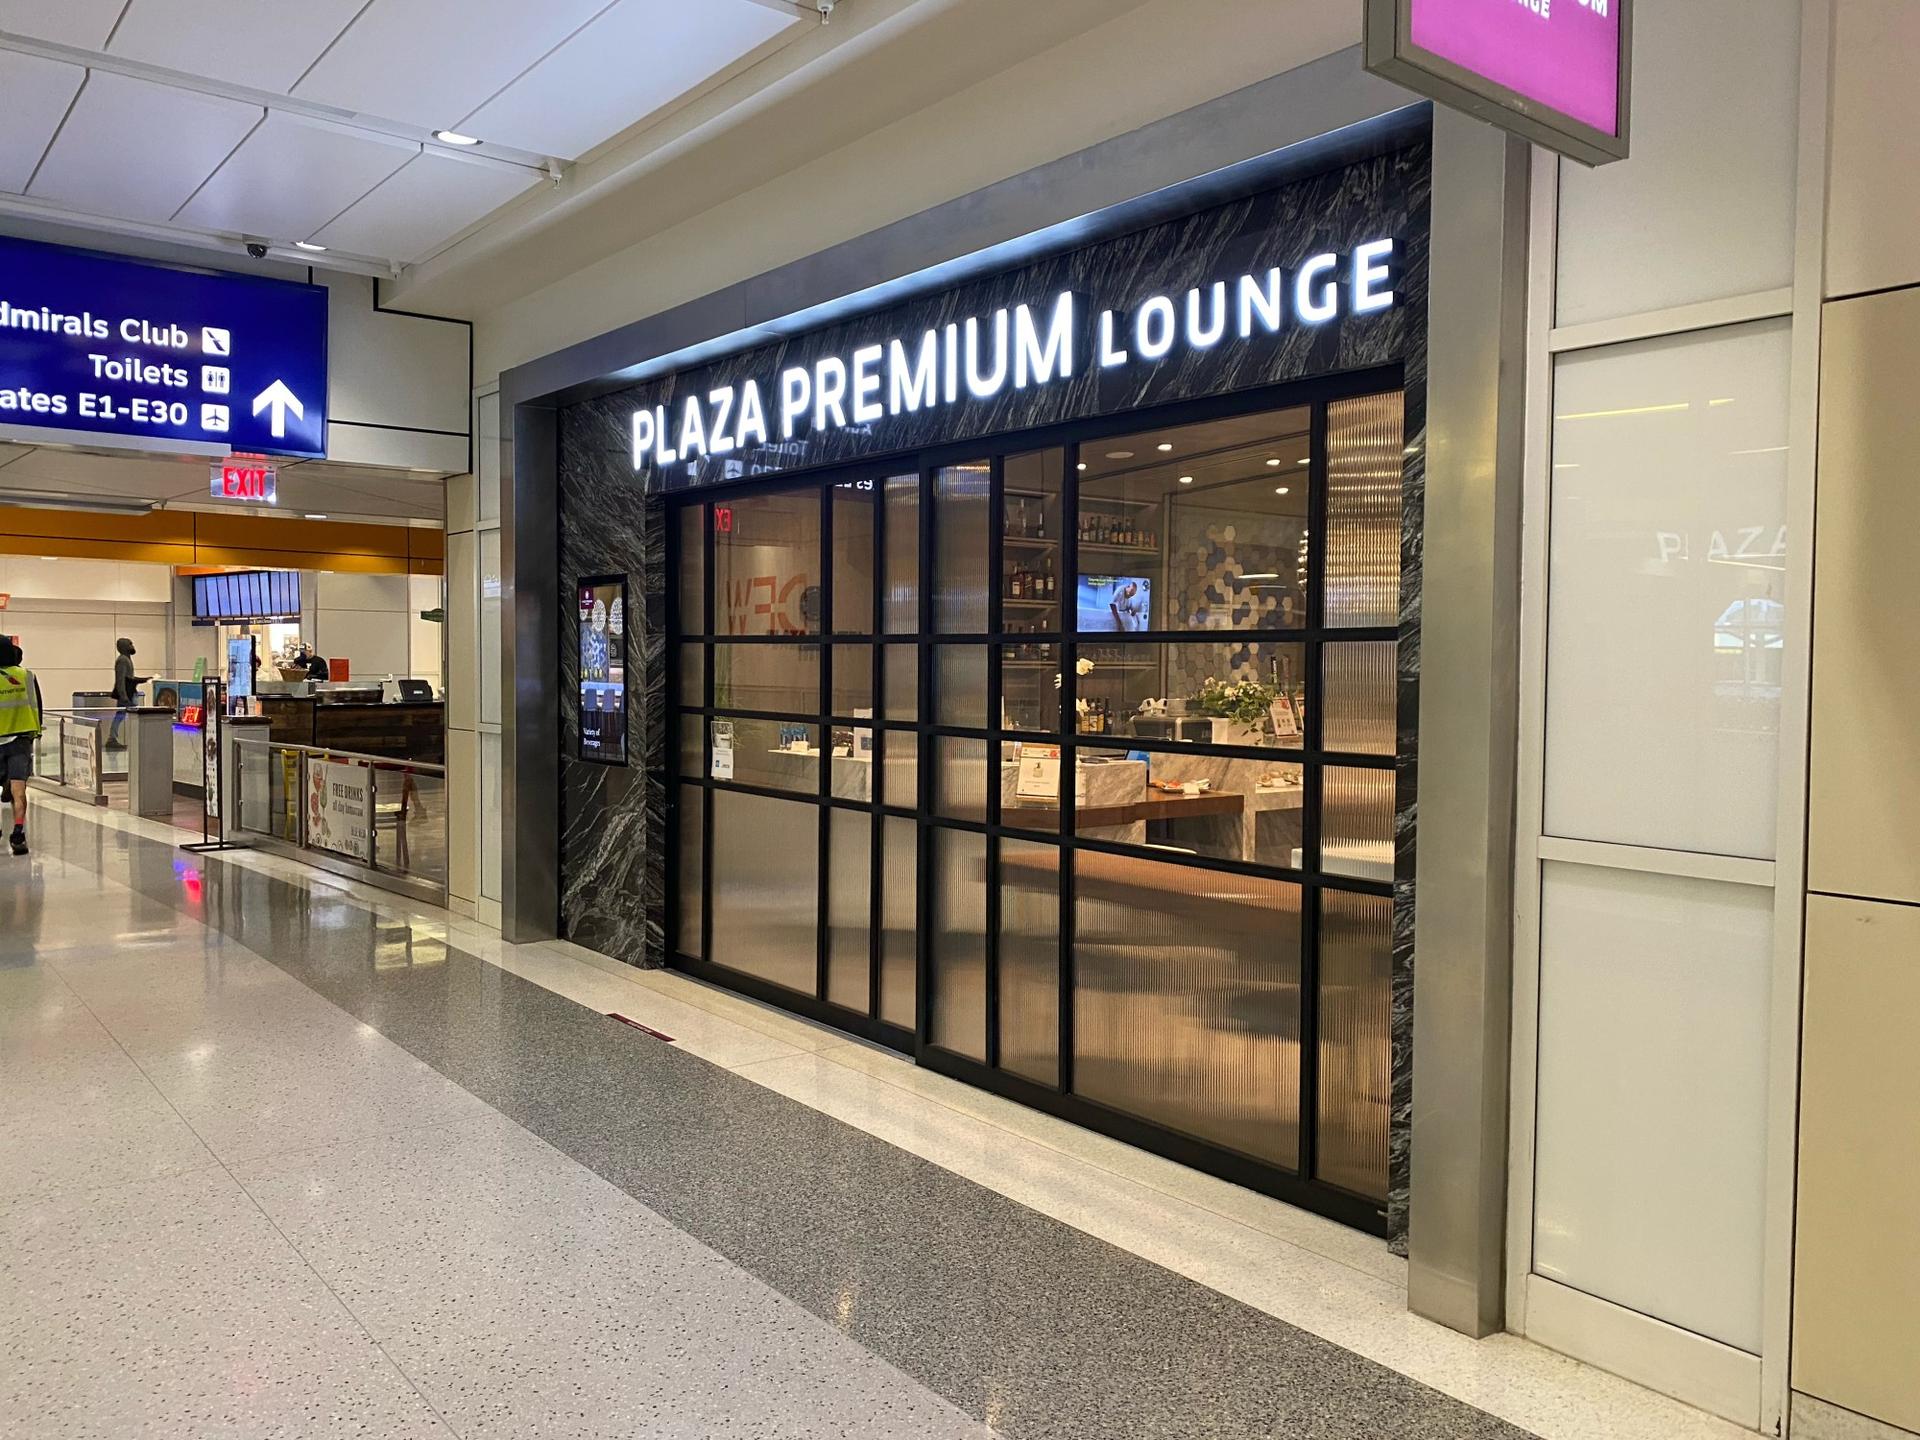 Plaza Premium Lounge image 6 of 17